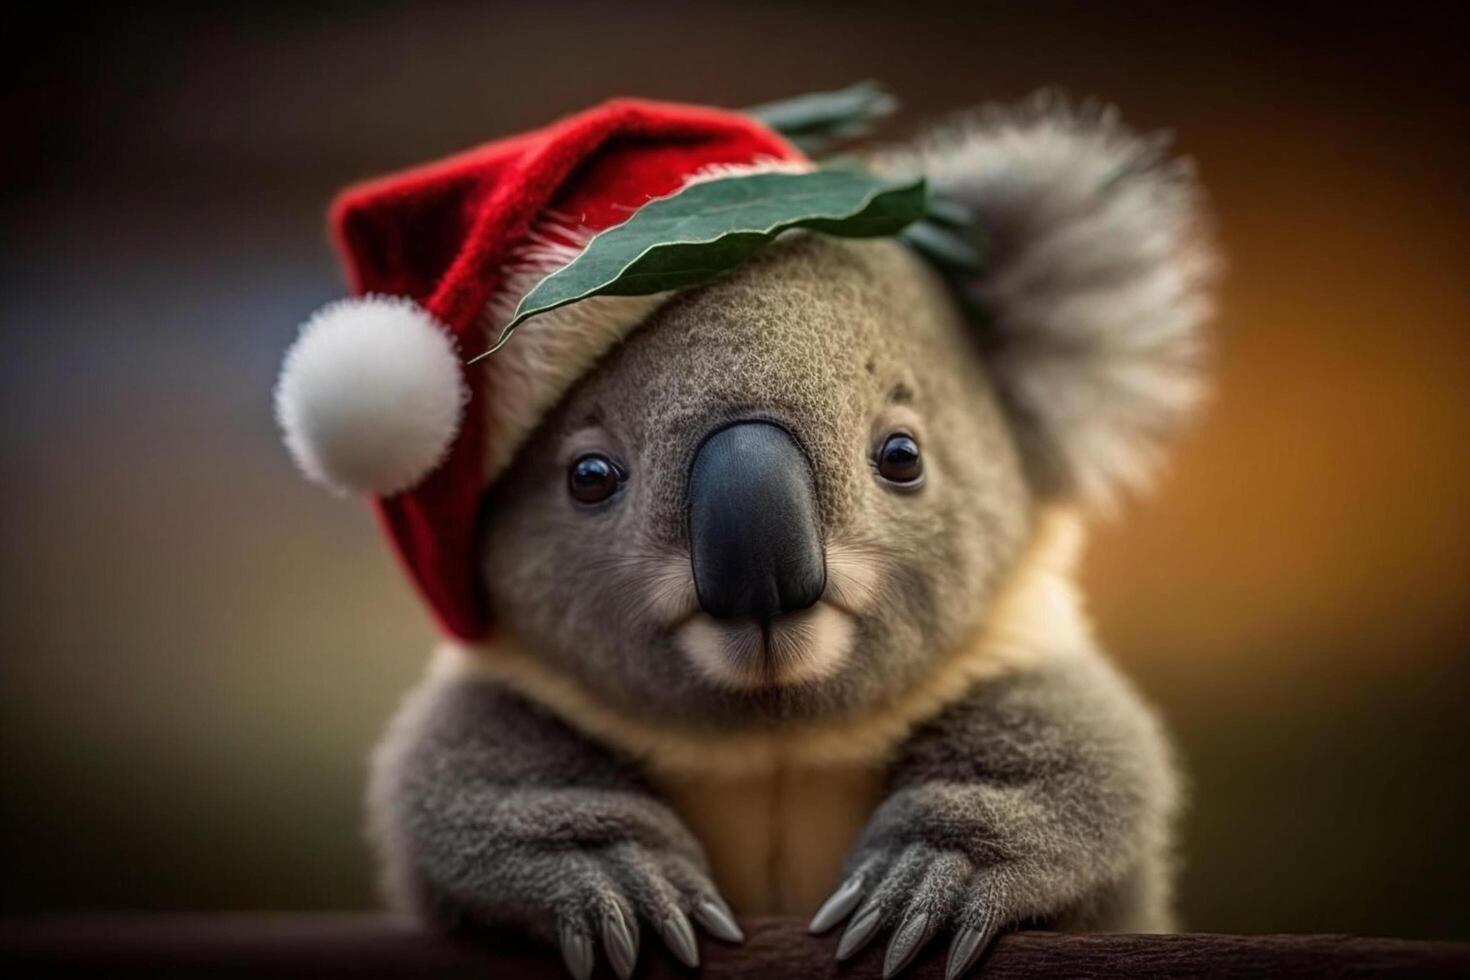 Koala wearing Santa's Santa hat on Christmas Eve Content photo